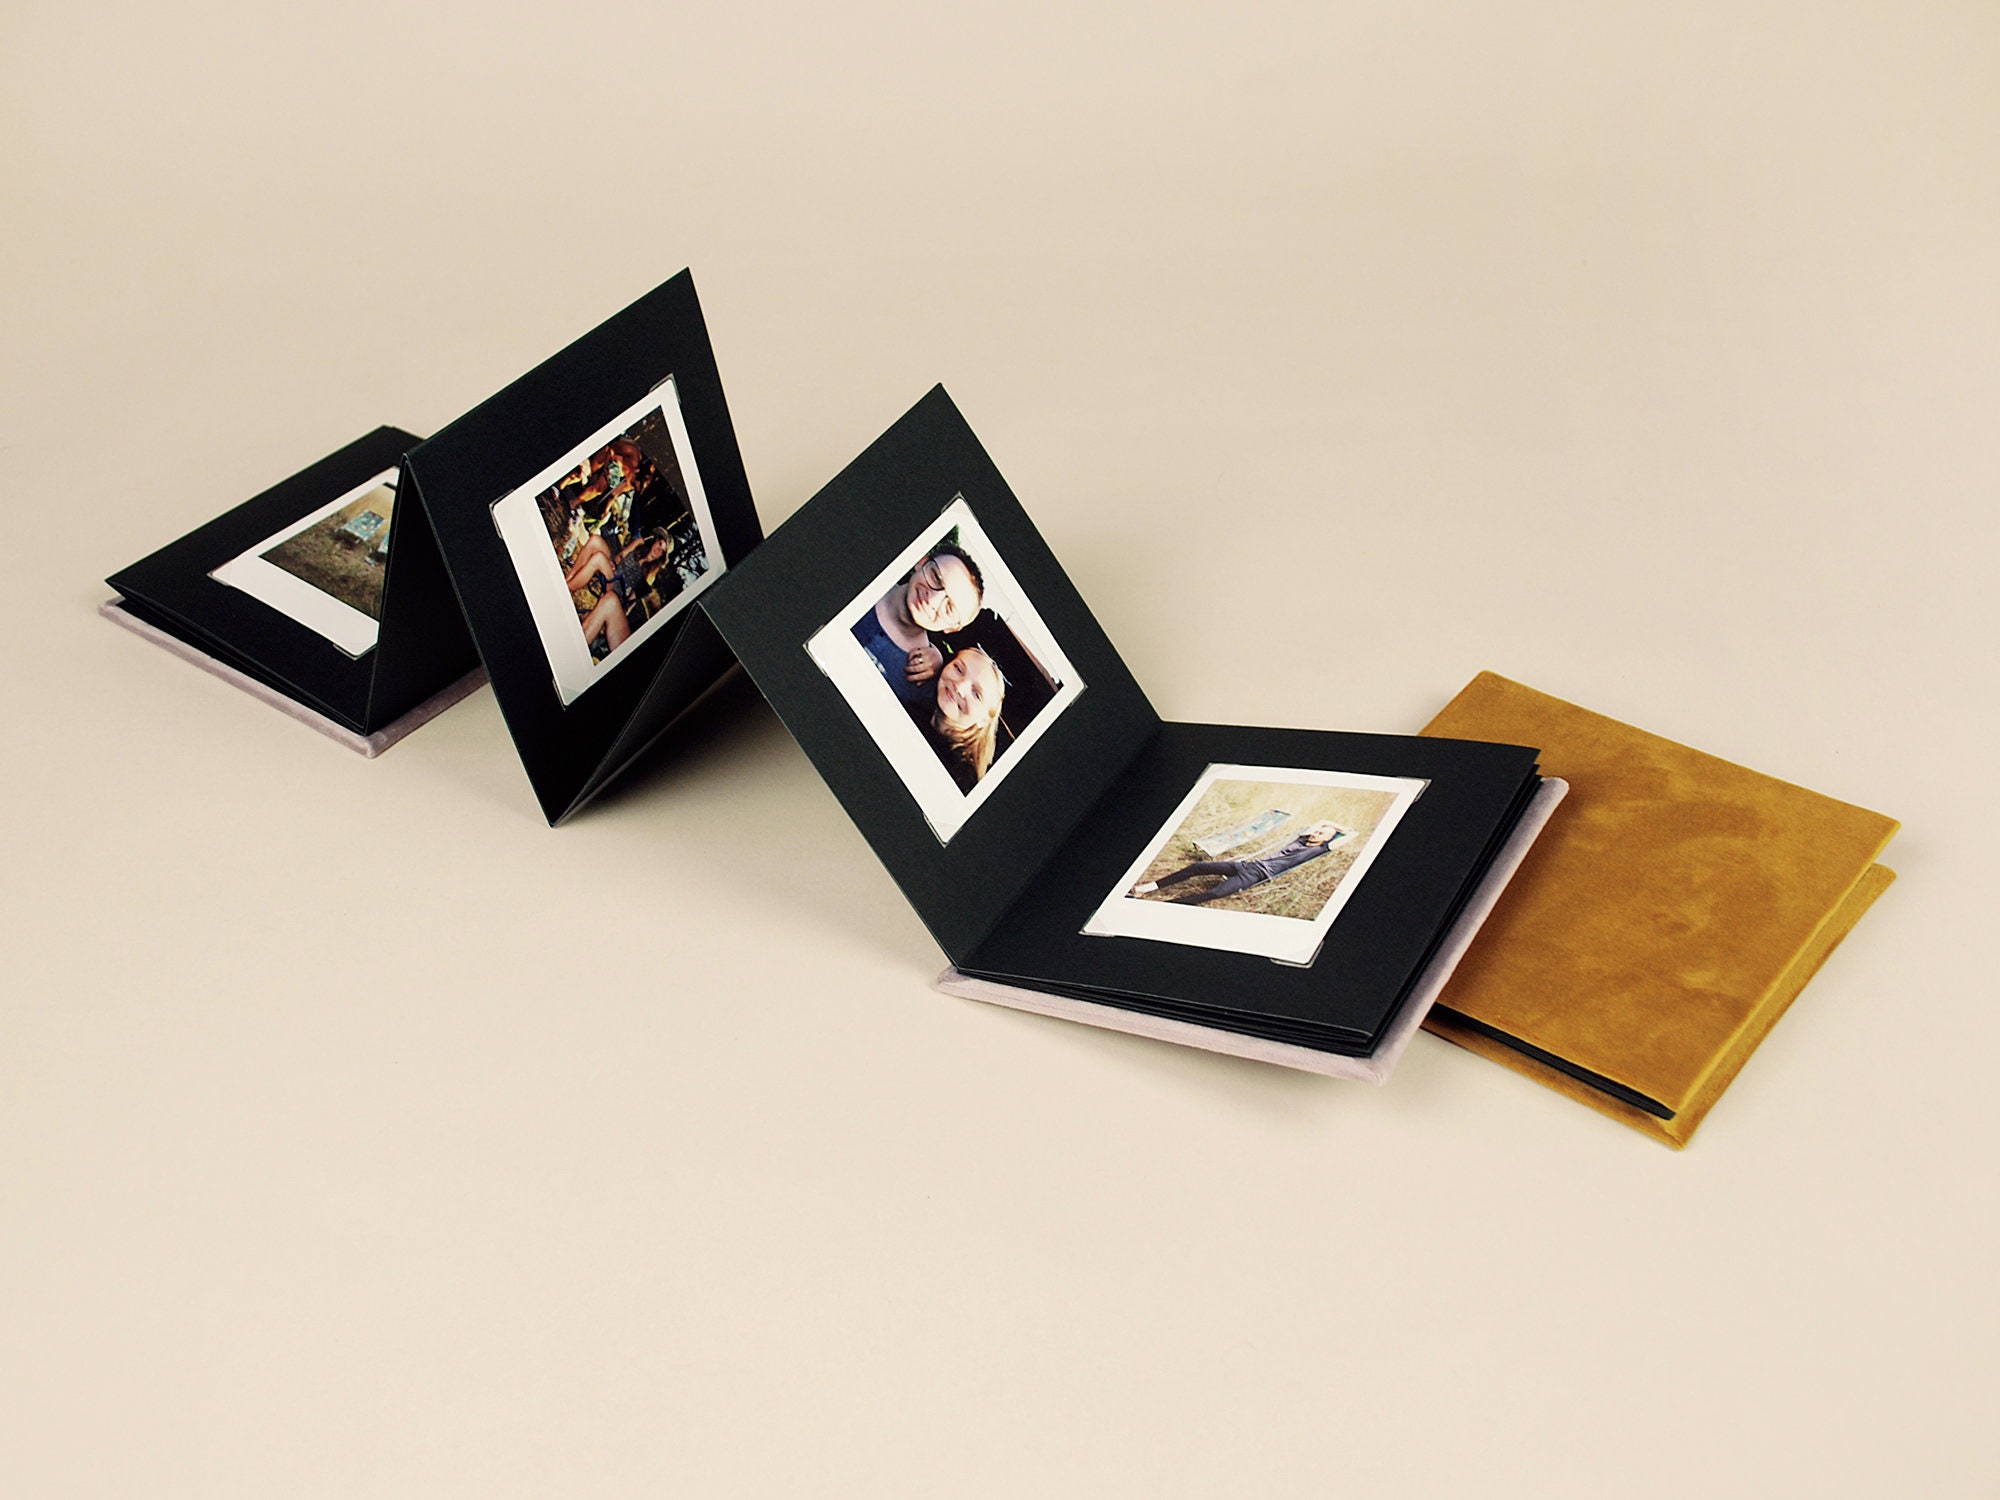 Small Photo Album for 36 Photos 4x6. Photo Album With 36 Slip-in Sleeves.  Pocket Photo Album for 4x6 10x15 Cm Photos. Brag Book. 